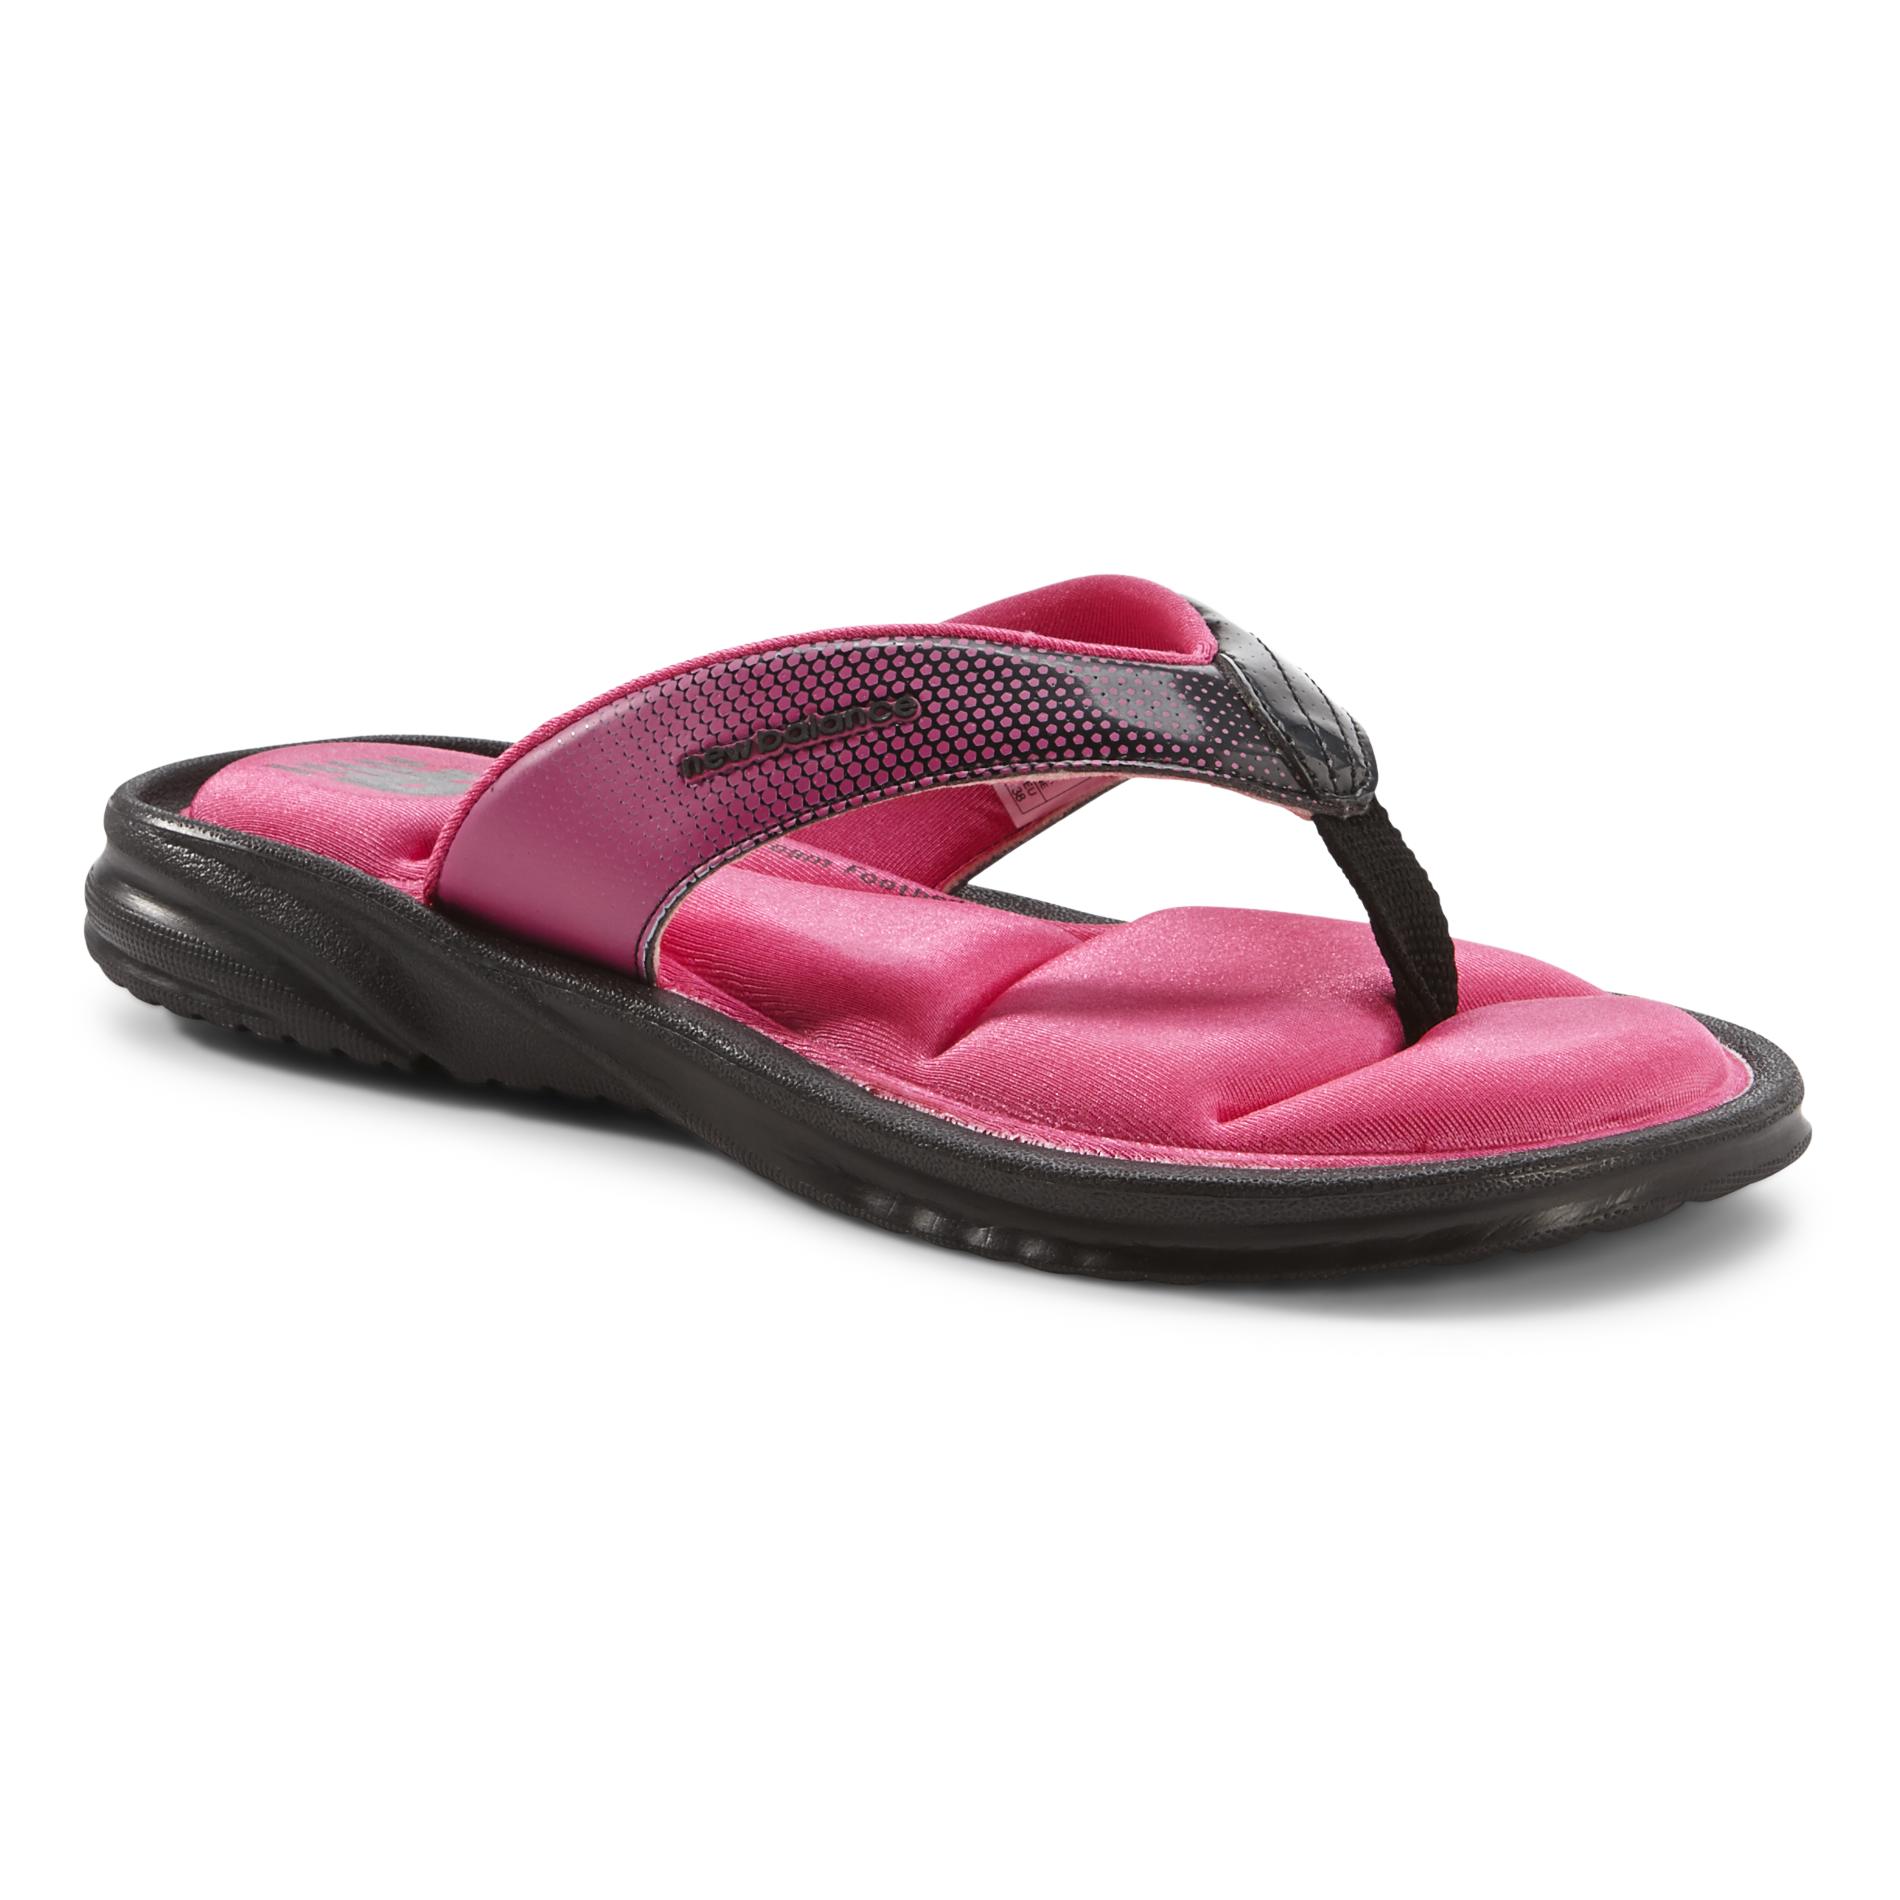 New Balance Women's Cruz II Thong Sandal - Black/Pink